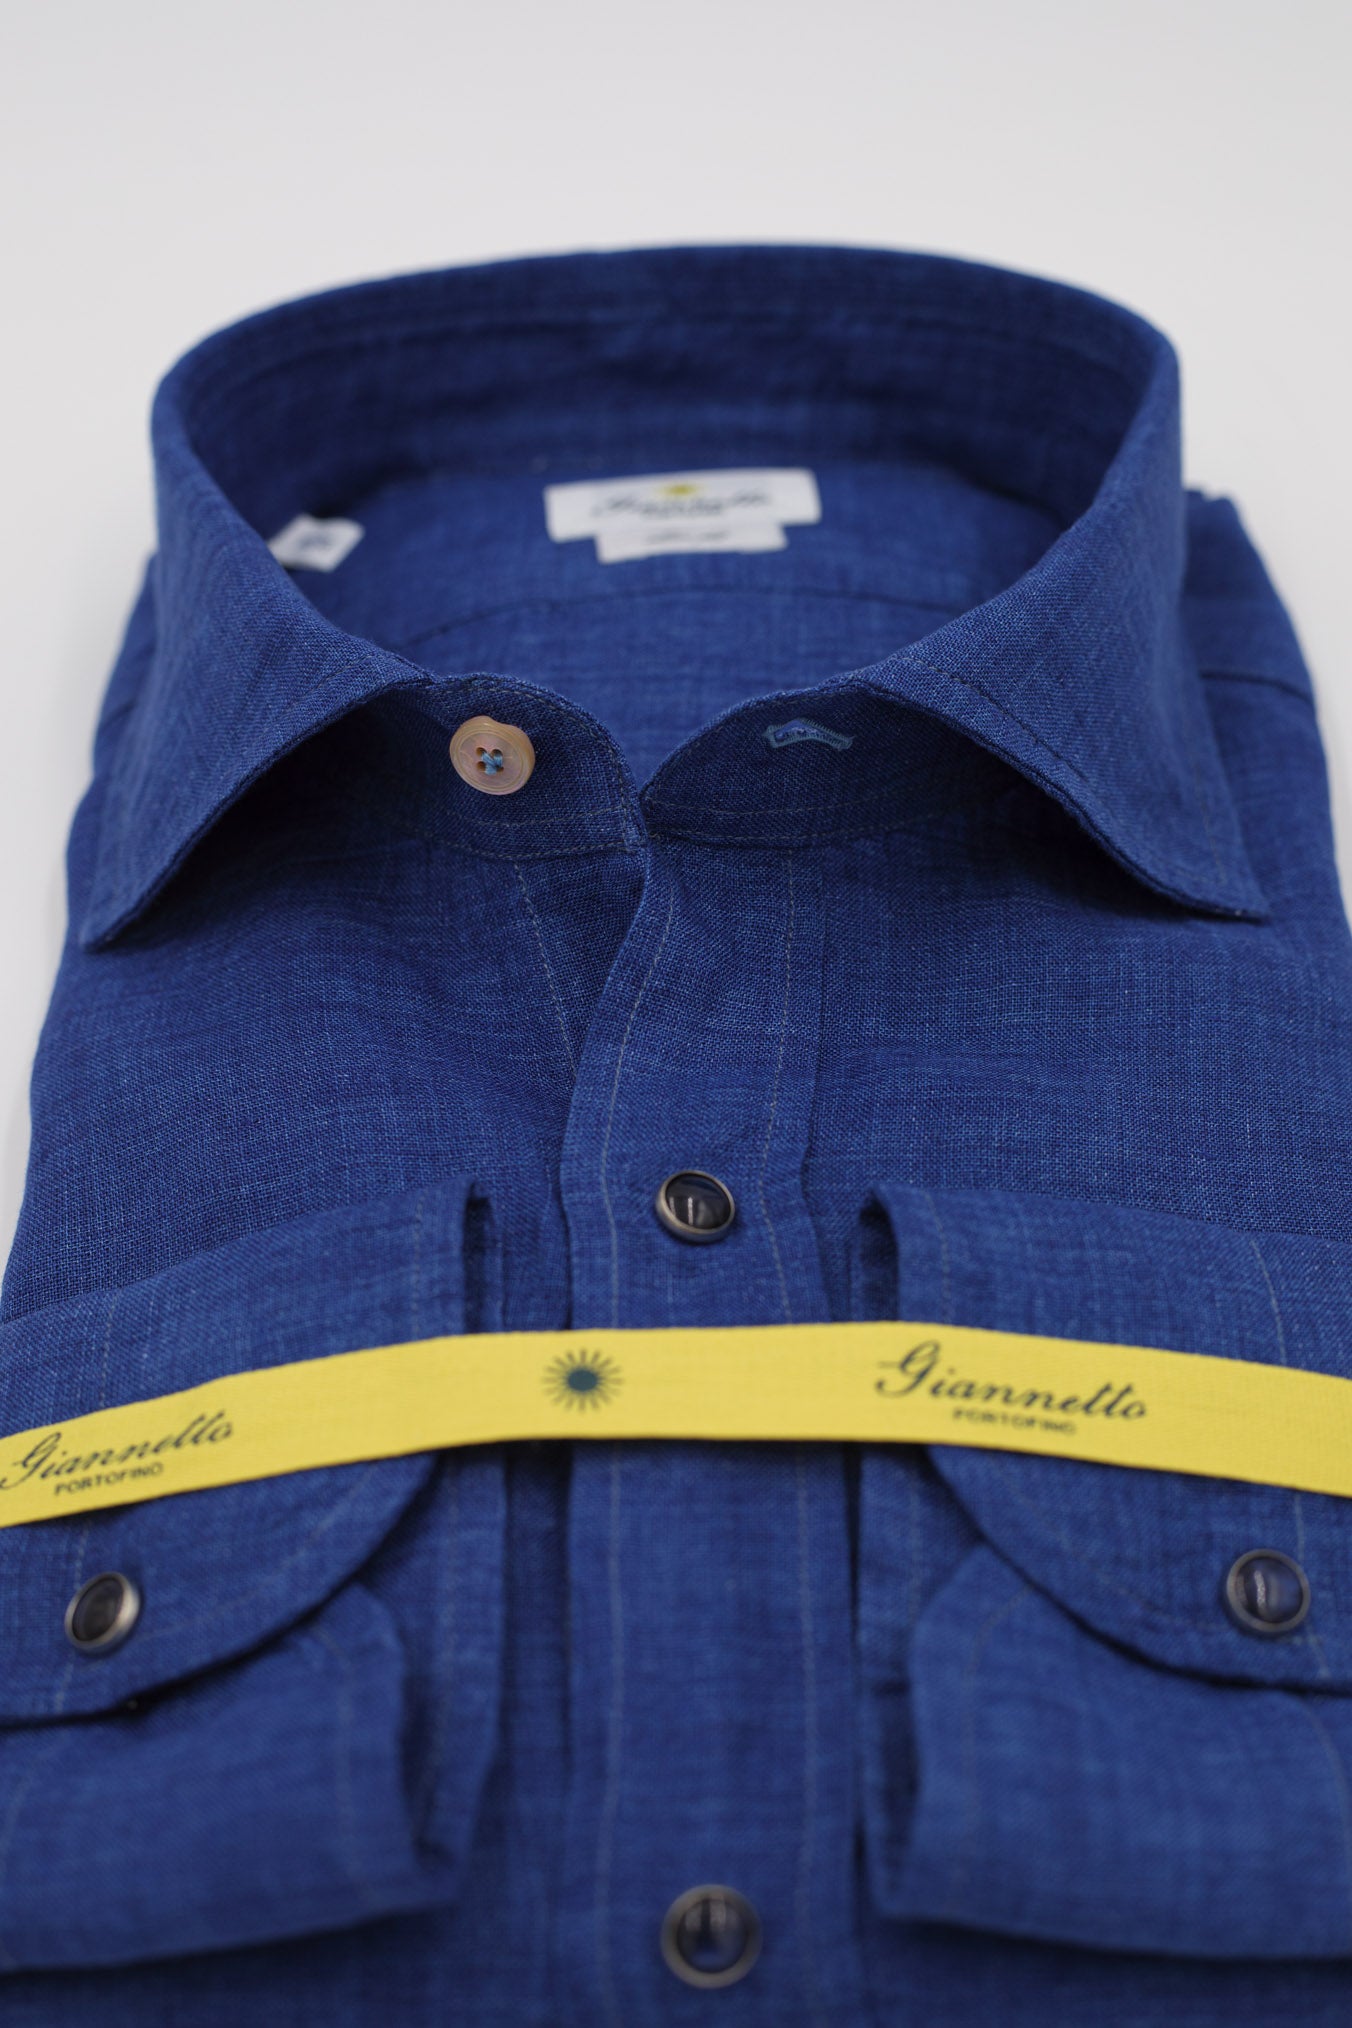 GIANNETTO PORTOFINO Blue Linen Shirt COMFORT FIT